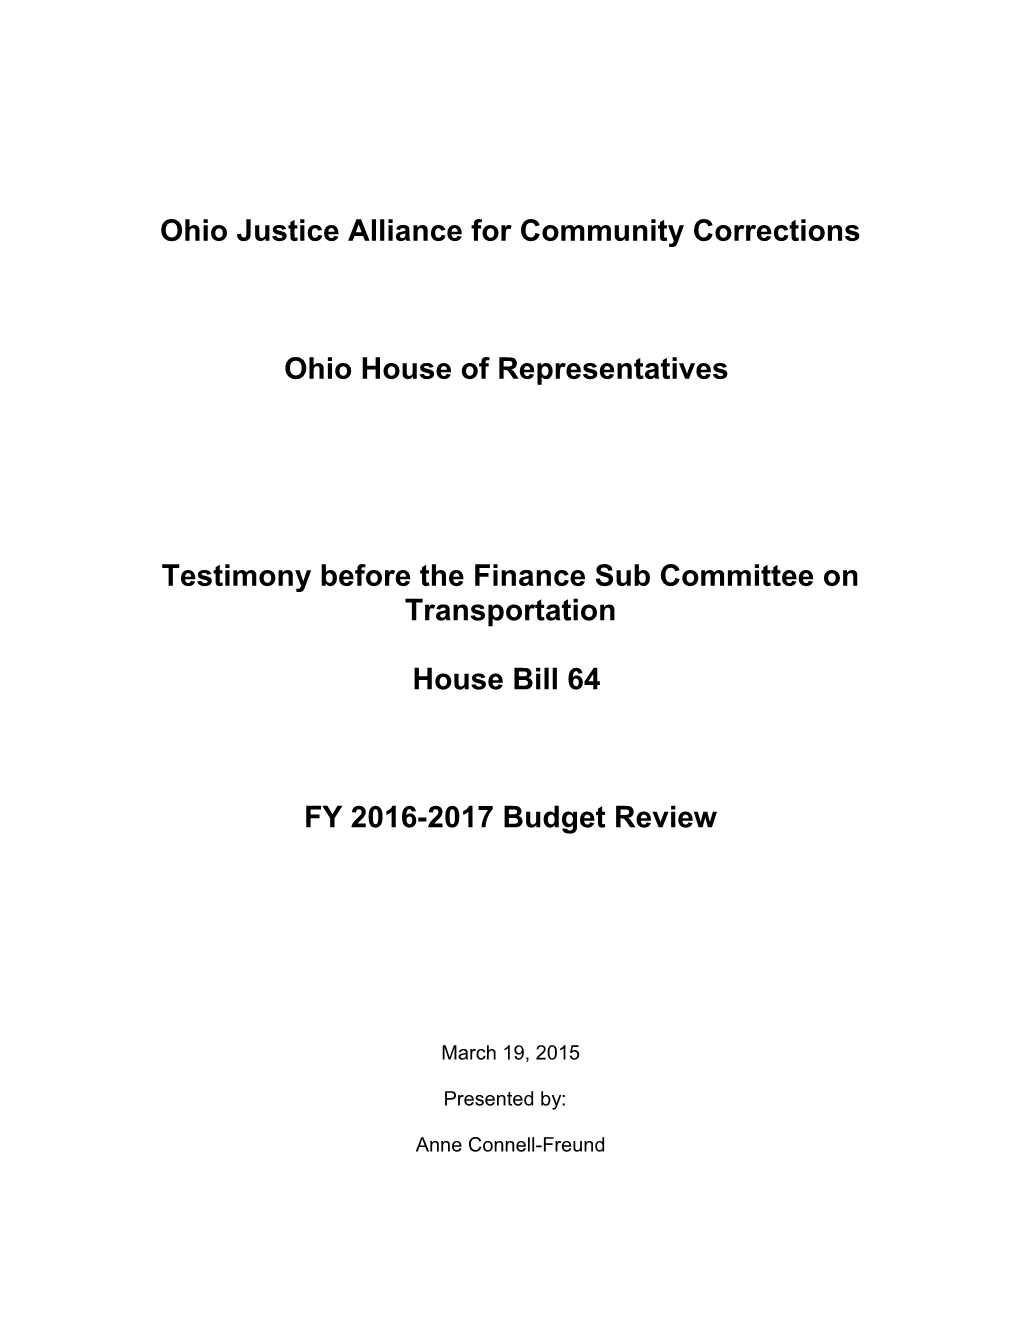 The Ohio Community Corrections Organization